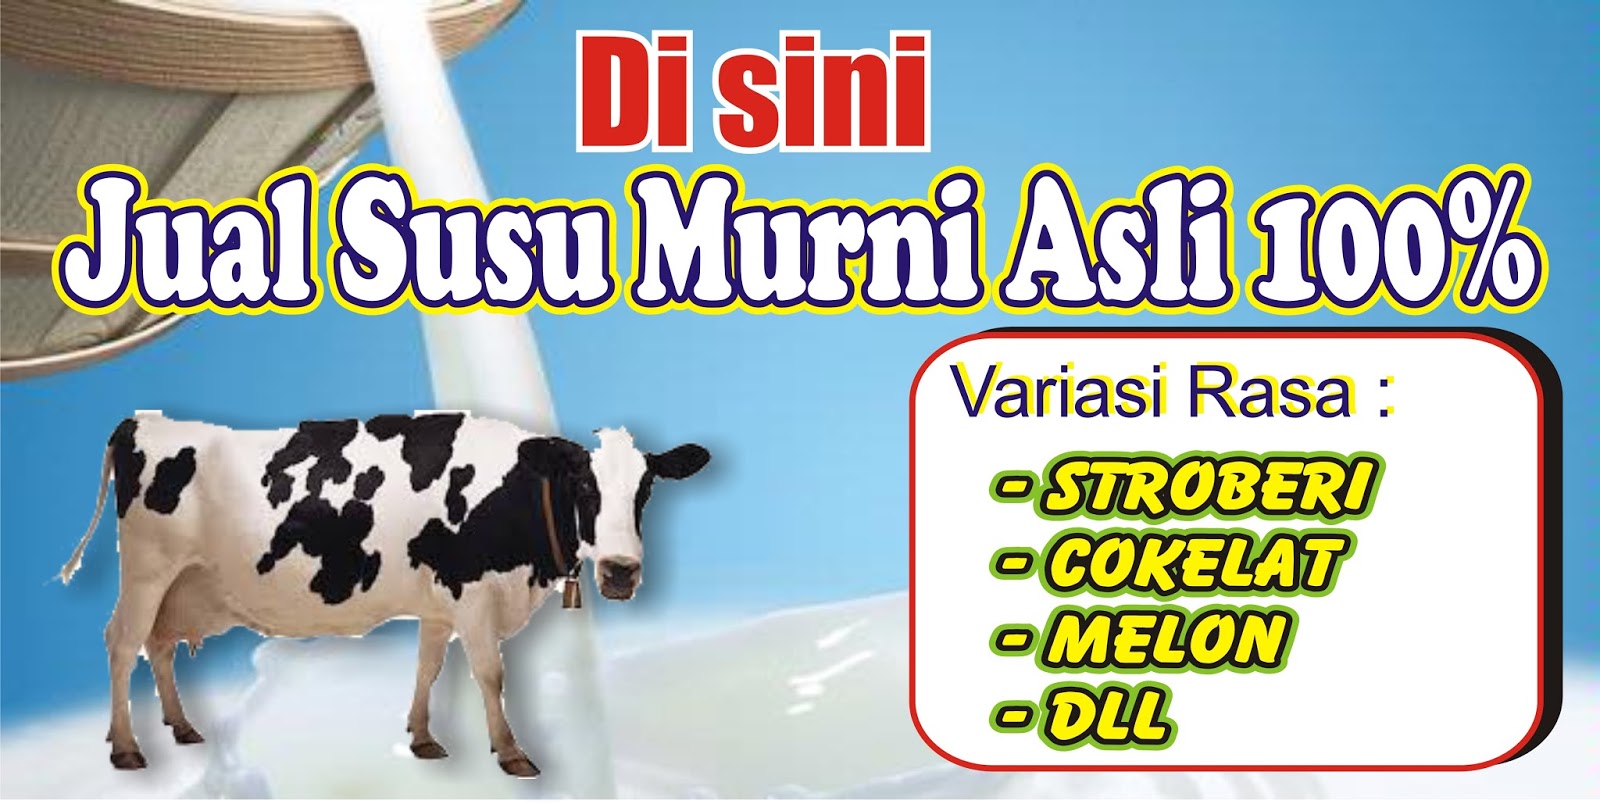 Download Contoh Spanduk Susu Murni cdr  KARYAKU